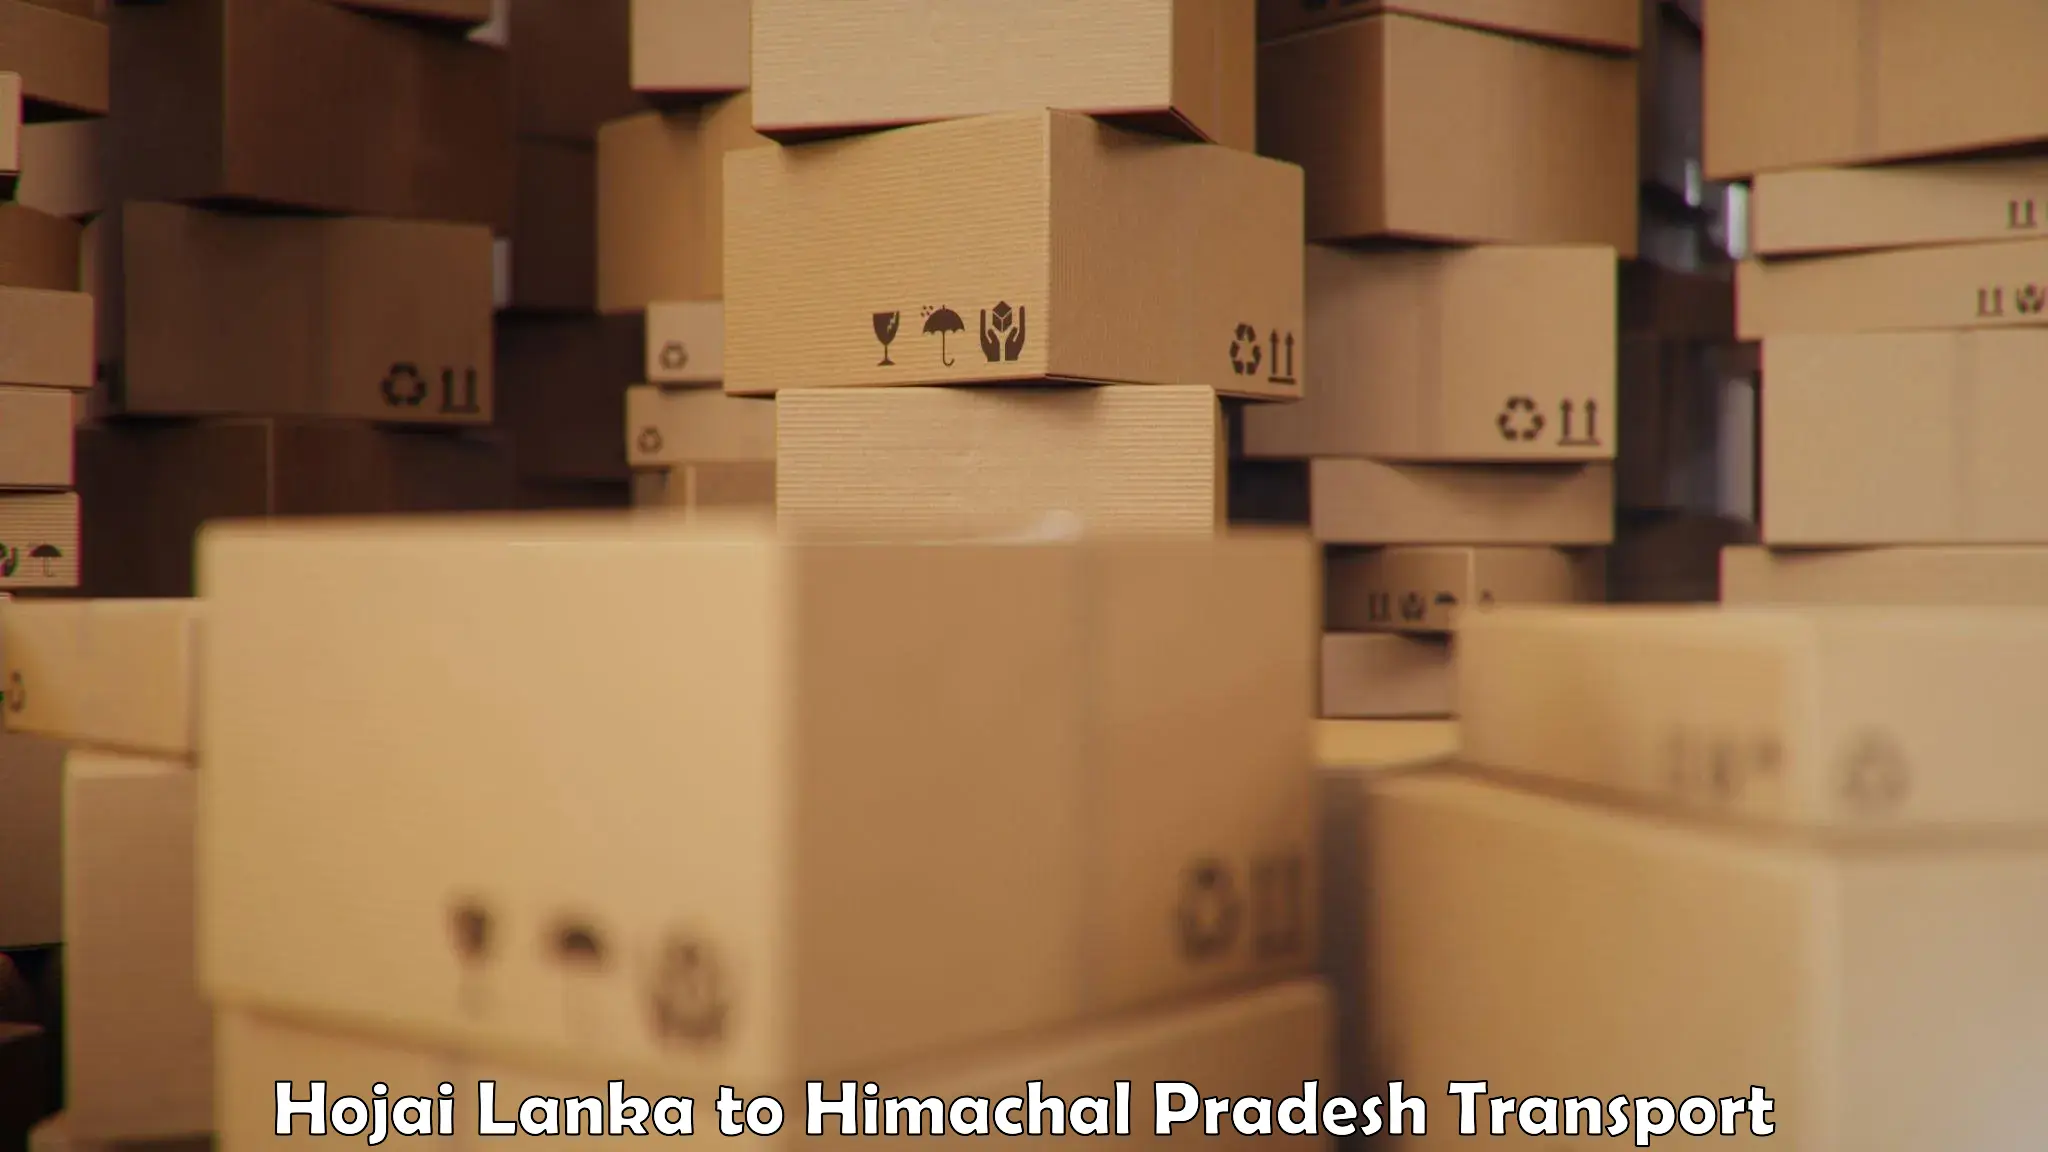 Cargo transportation services Hojai Lanka to Bharari